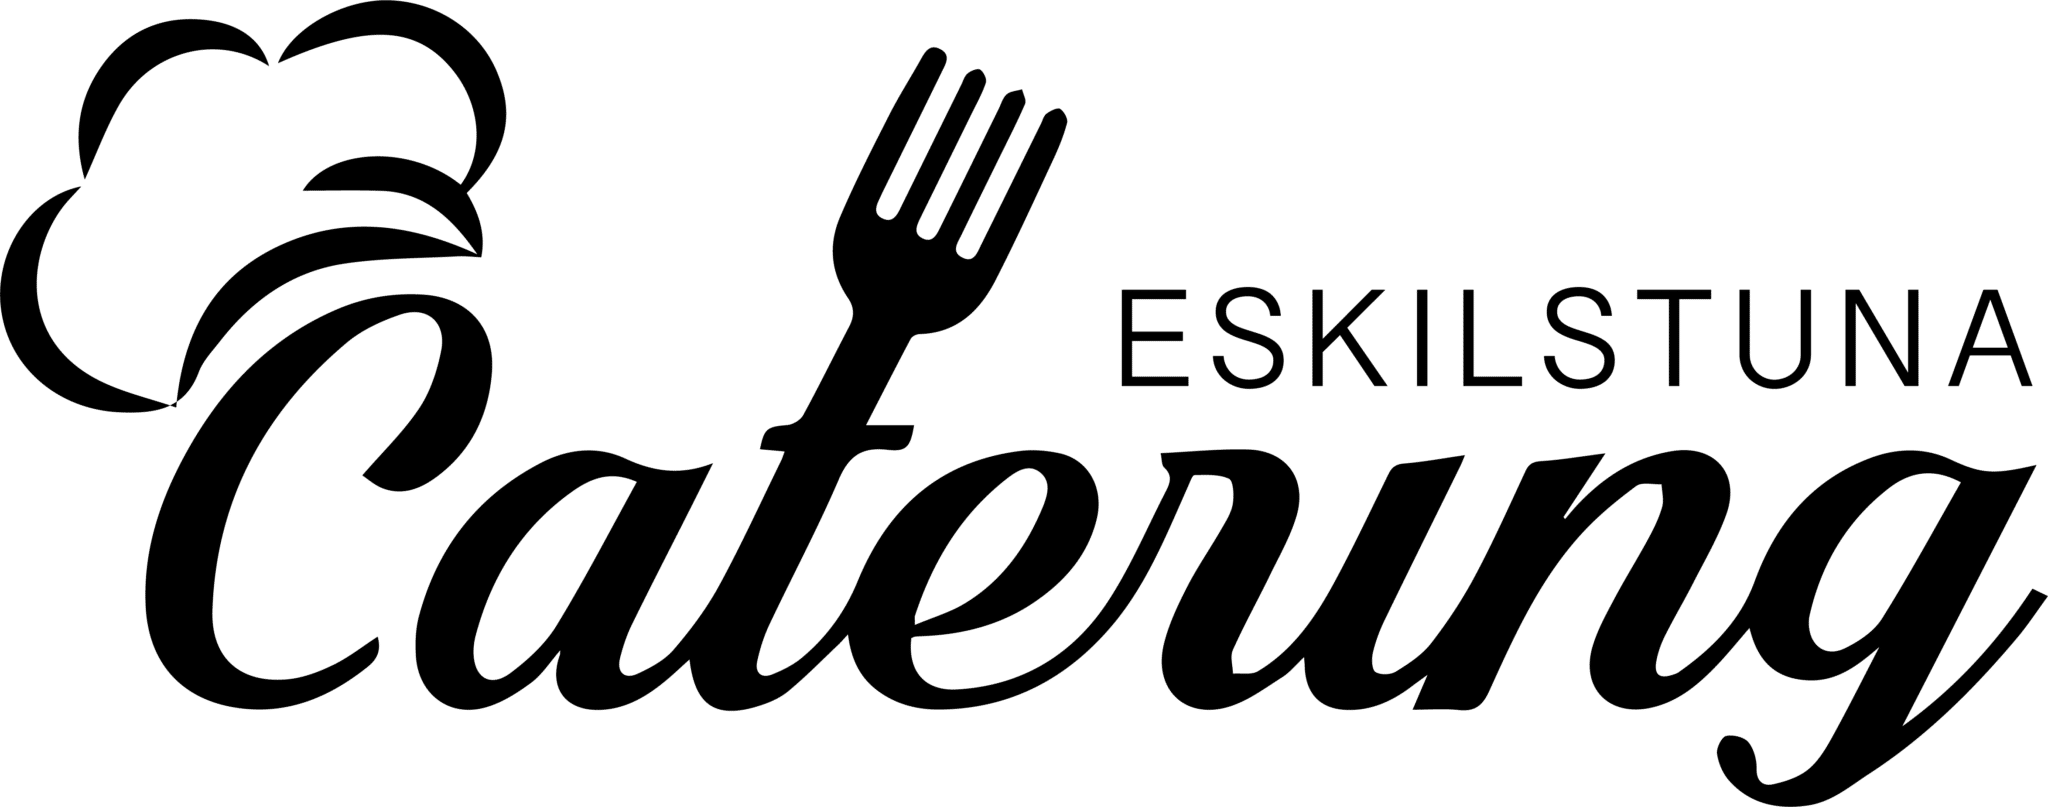 Catering Eskilstuna